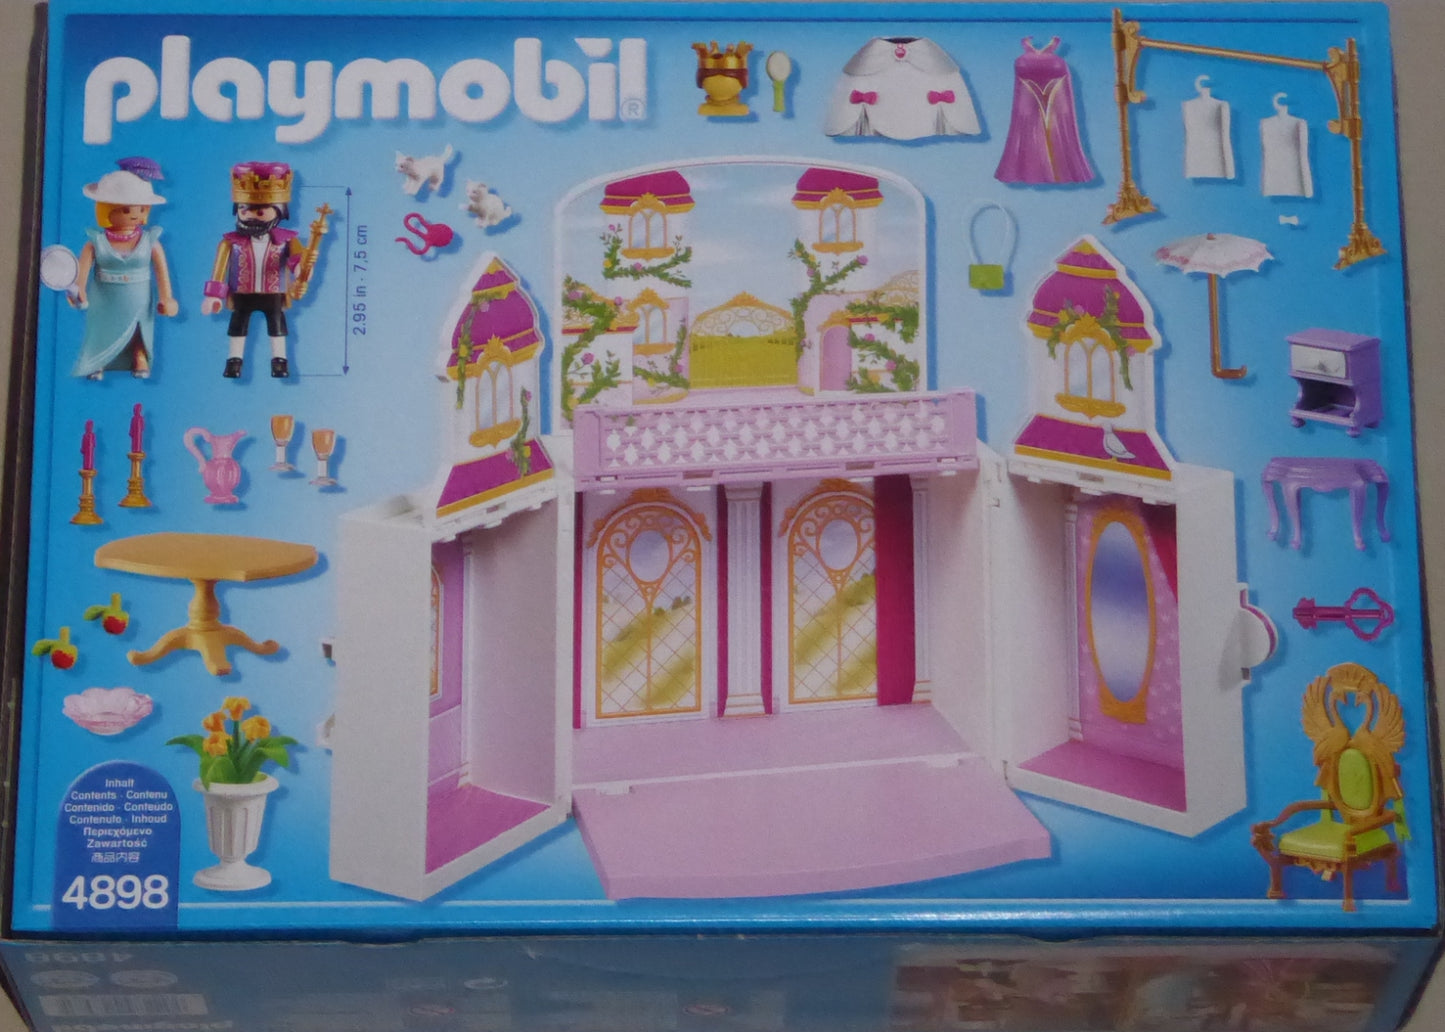 Playmobil 4898 Aufklapp-Spiel-Box "Königsschloss"